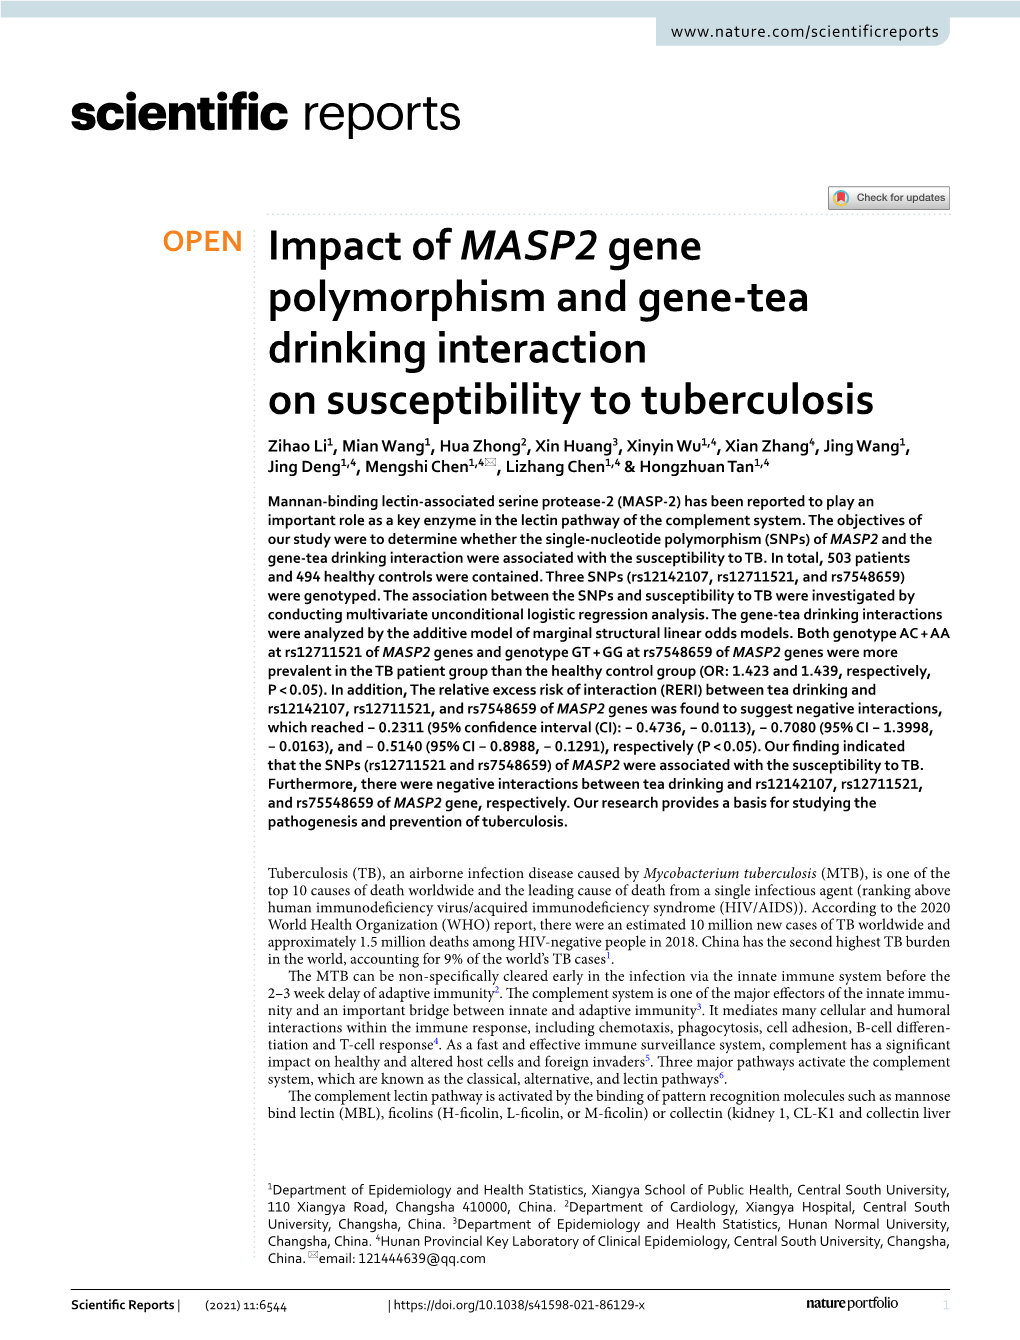 Impact of MASP2 Gene Polymorphism and Gene-Tea Drinking Interaction